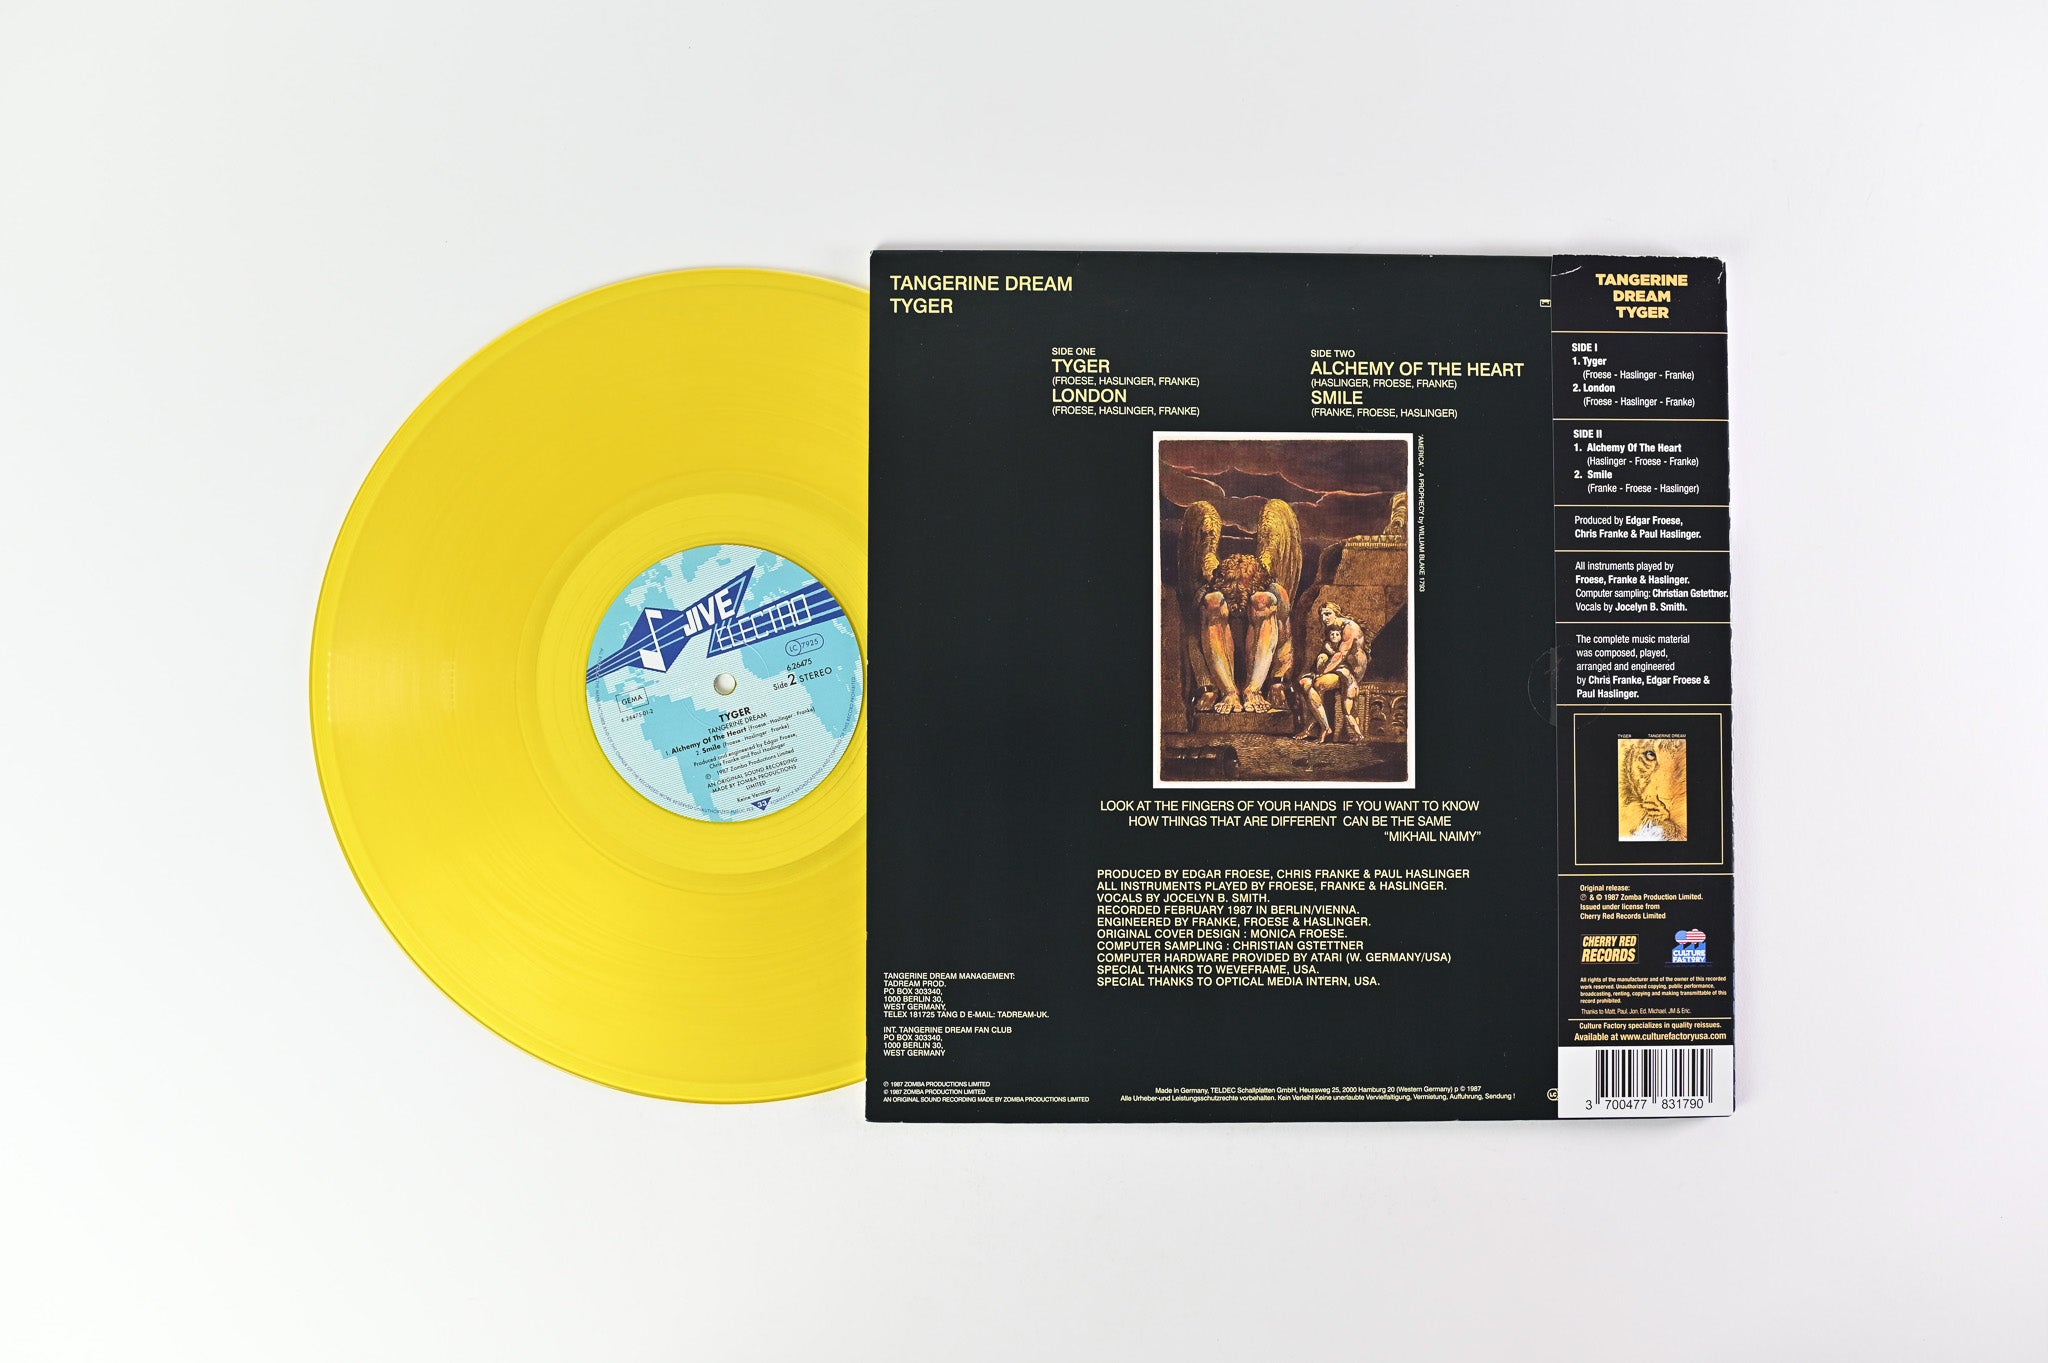 Tangerine Dream - Tyger on Culture Factory USA, Inc. - Yellow Vinyl RSD Reissue